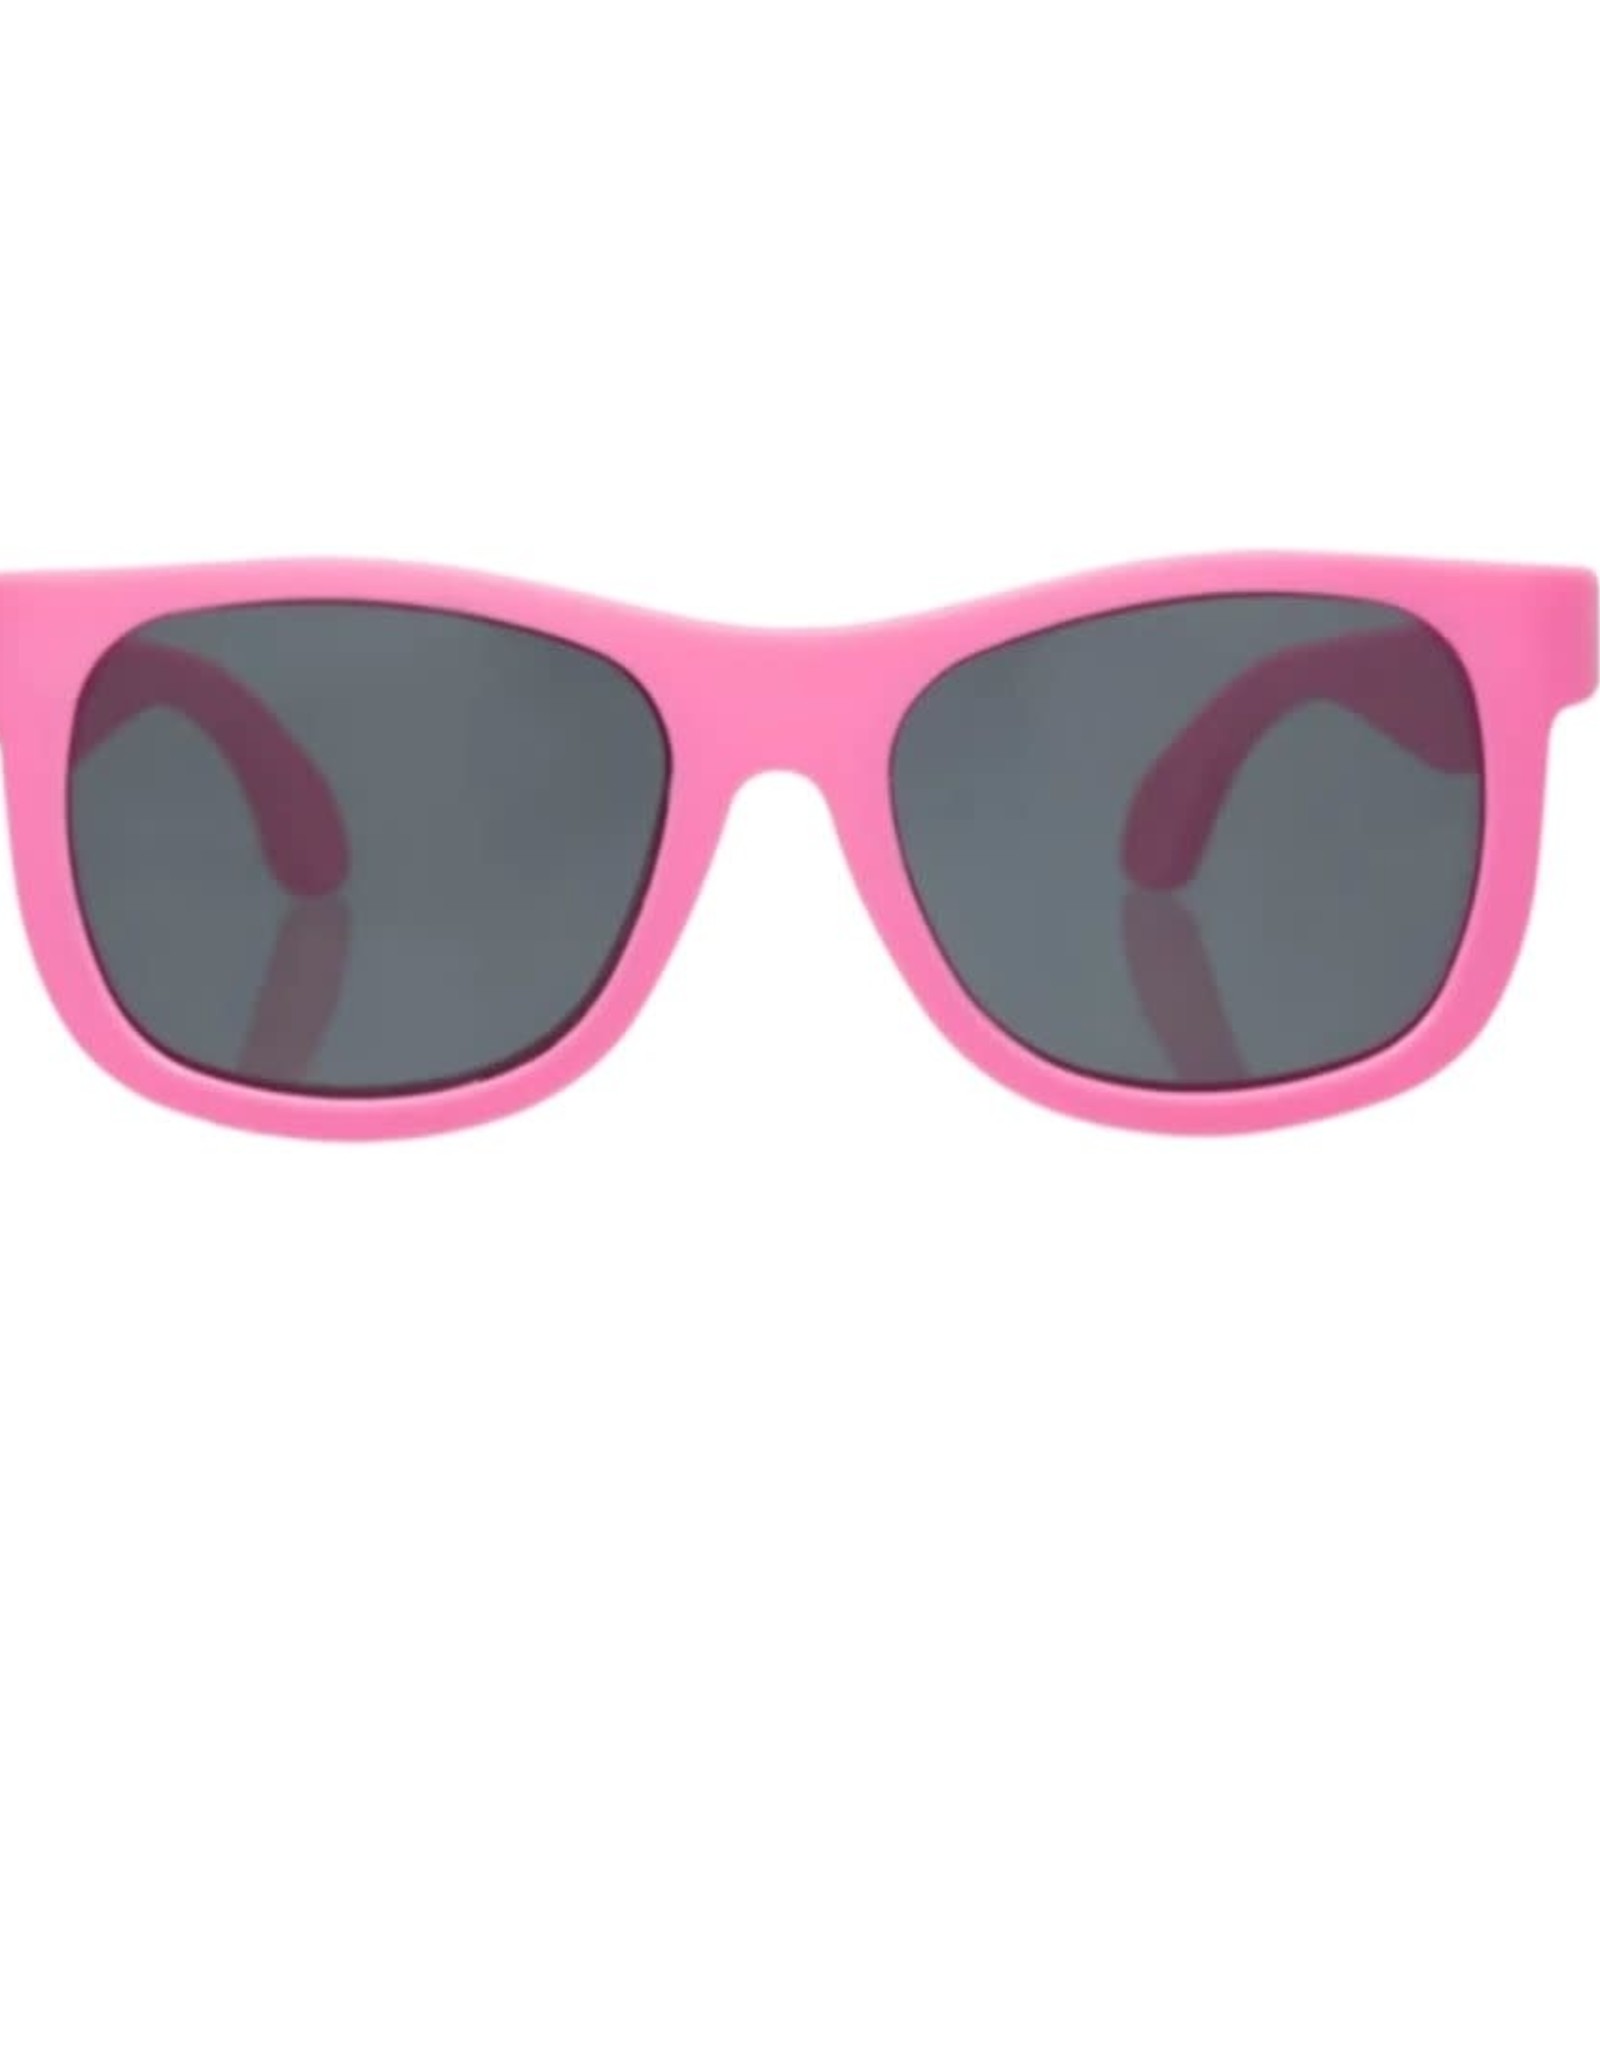 Babiators Navigator Sunglasses, Think Pink